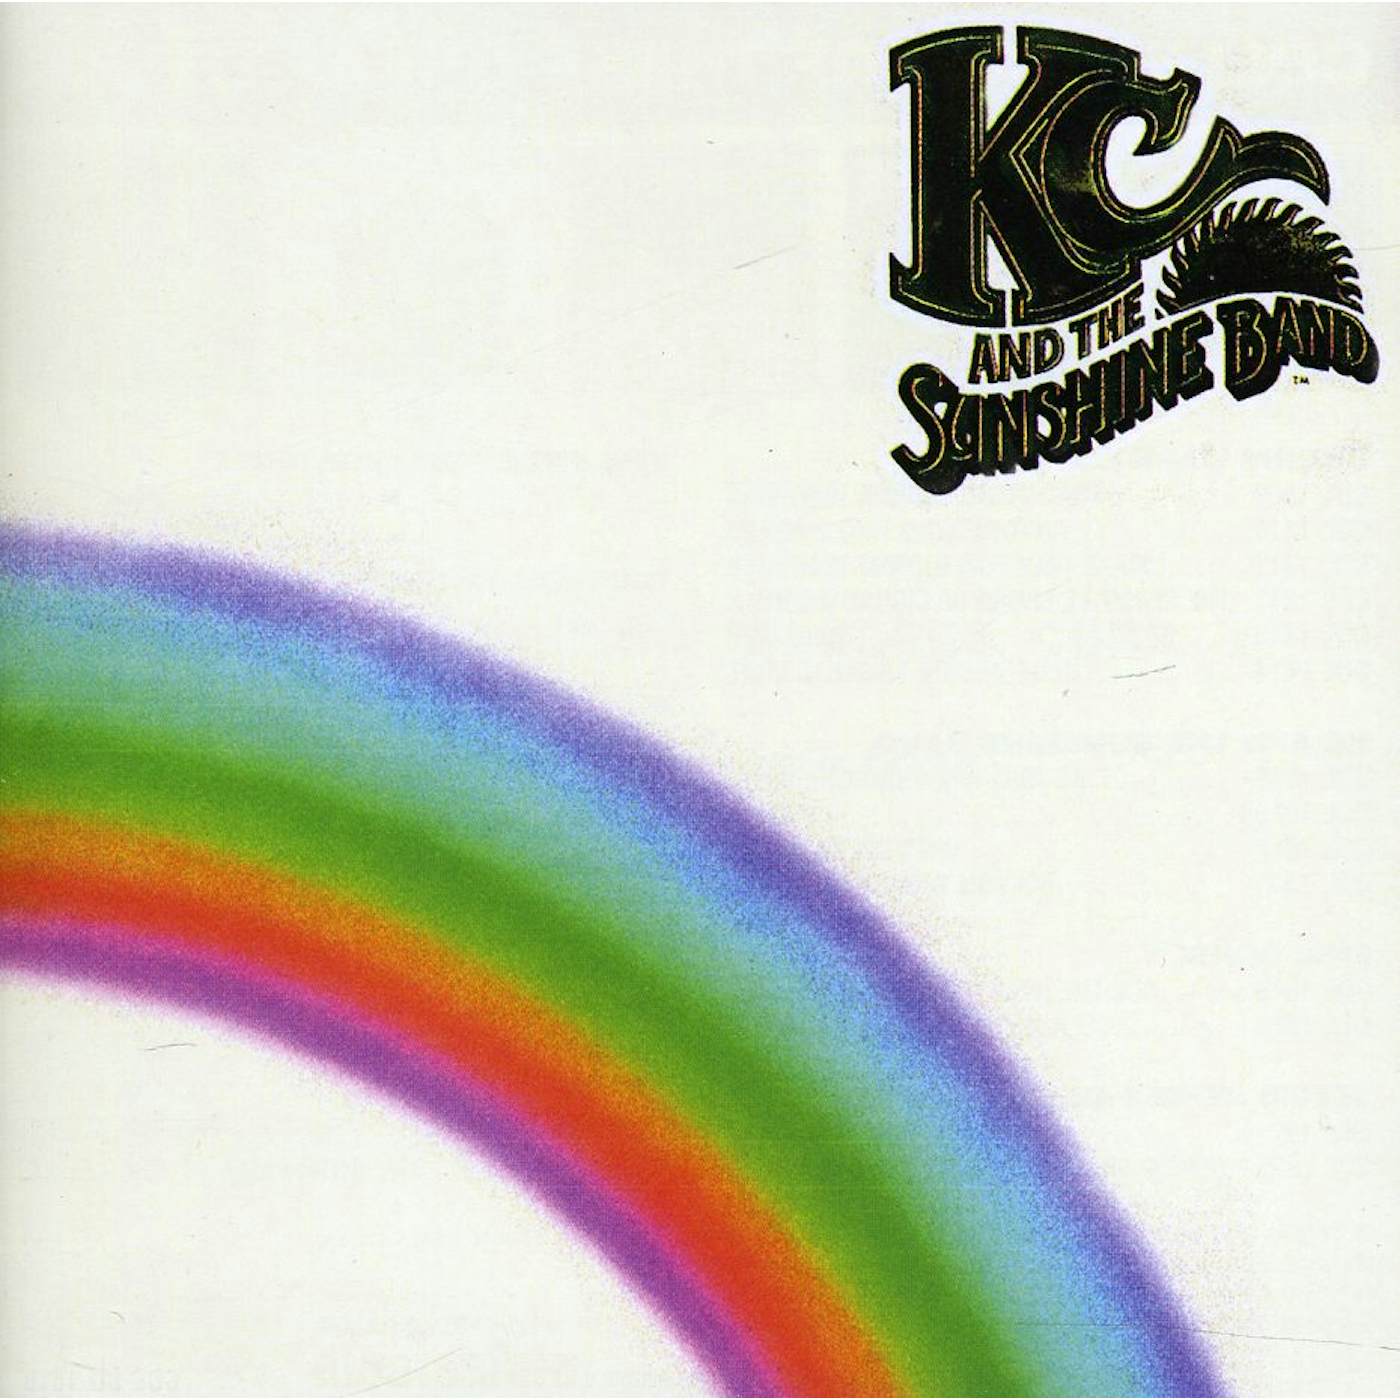 K.C. & SUNSHINE BAND PT. 3 CD